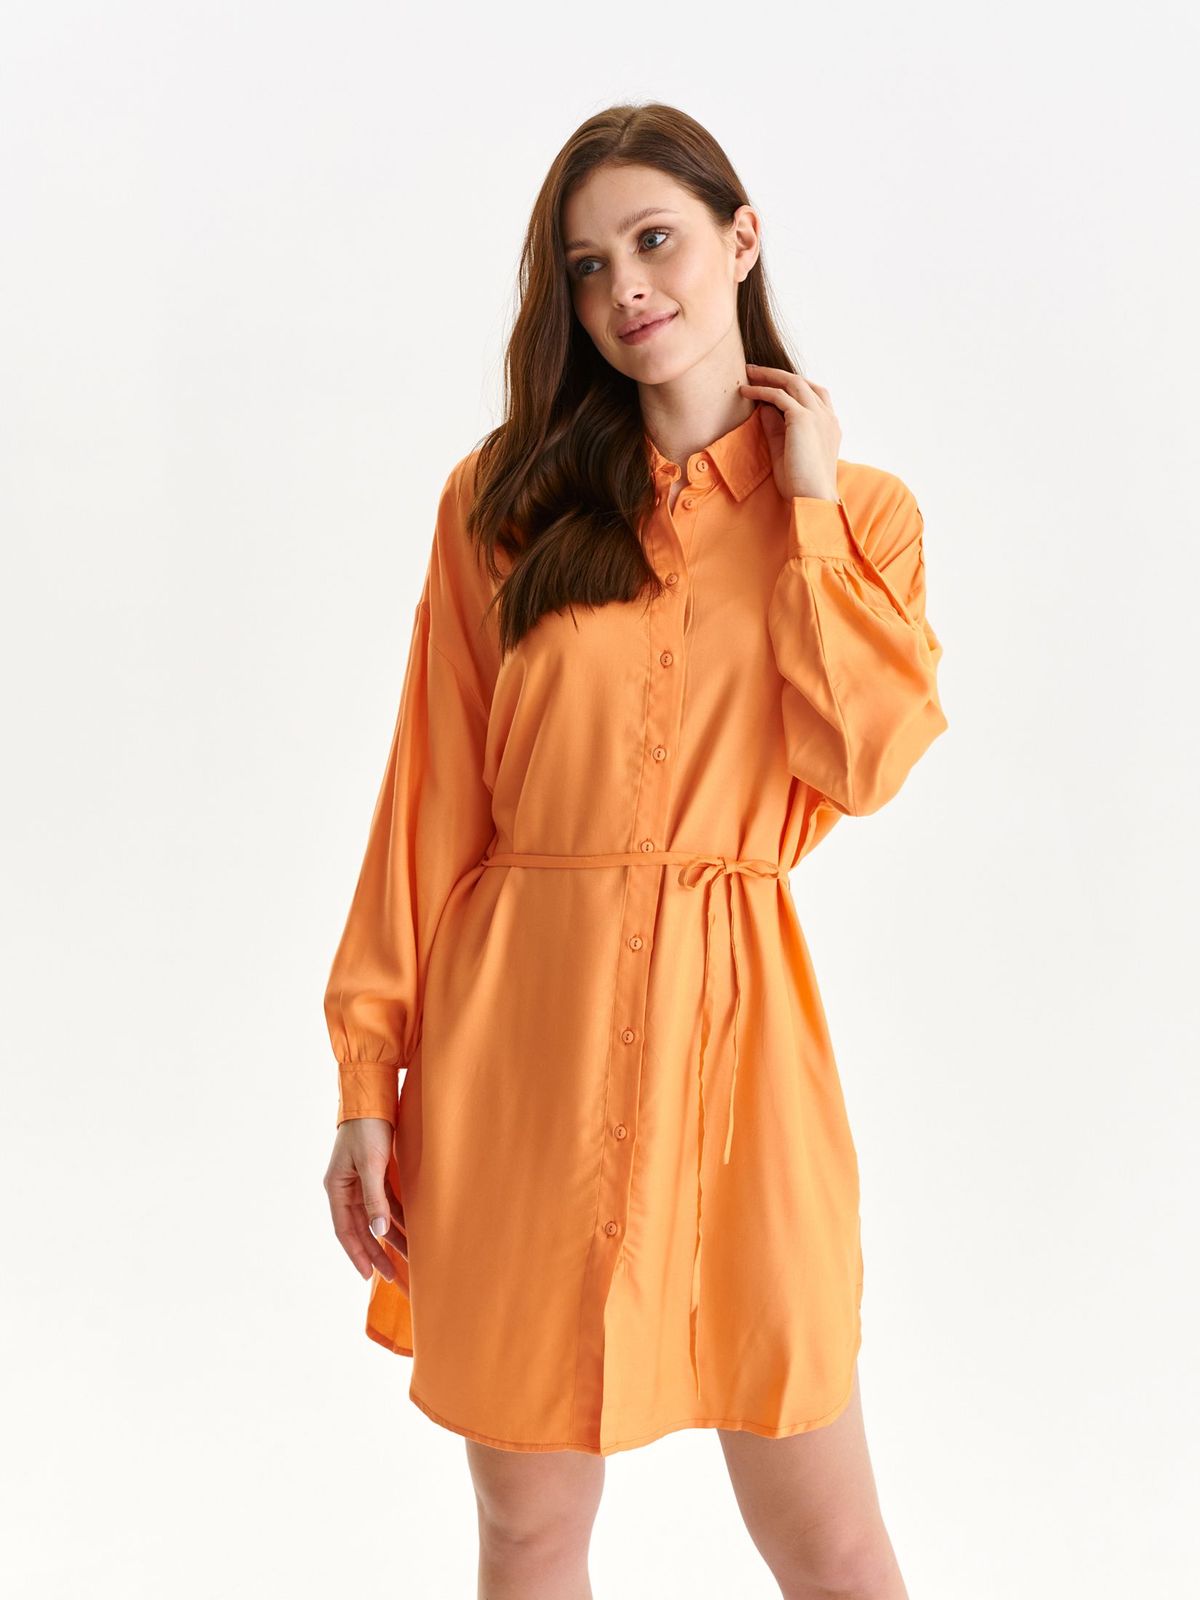 Orange dress thin fabric shirt dress loose fit with puffed sleeves 1 - StarShinerS.com